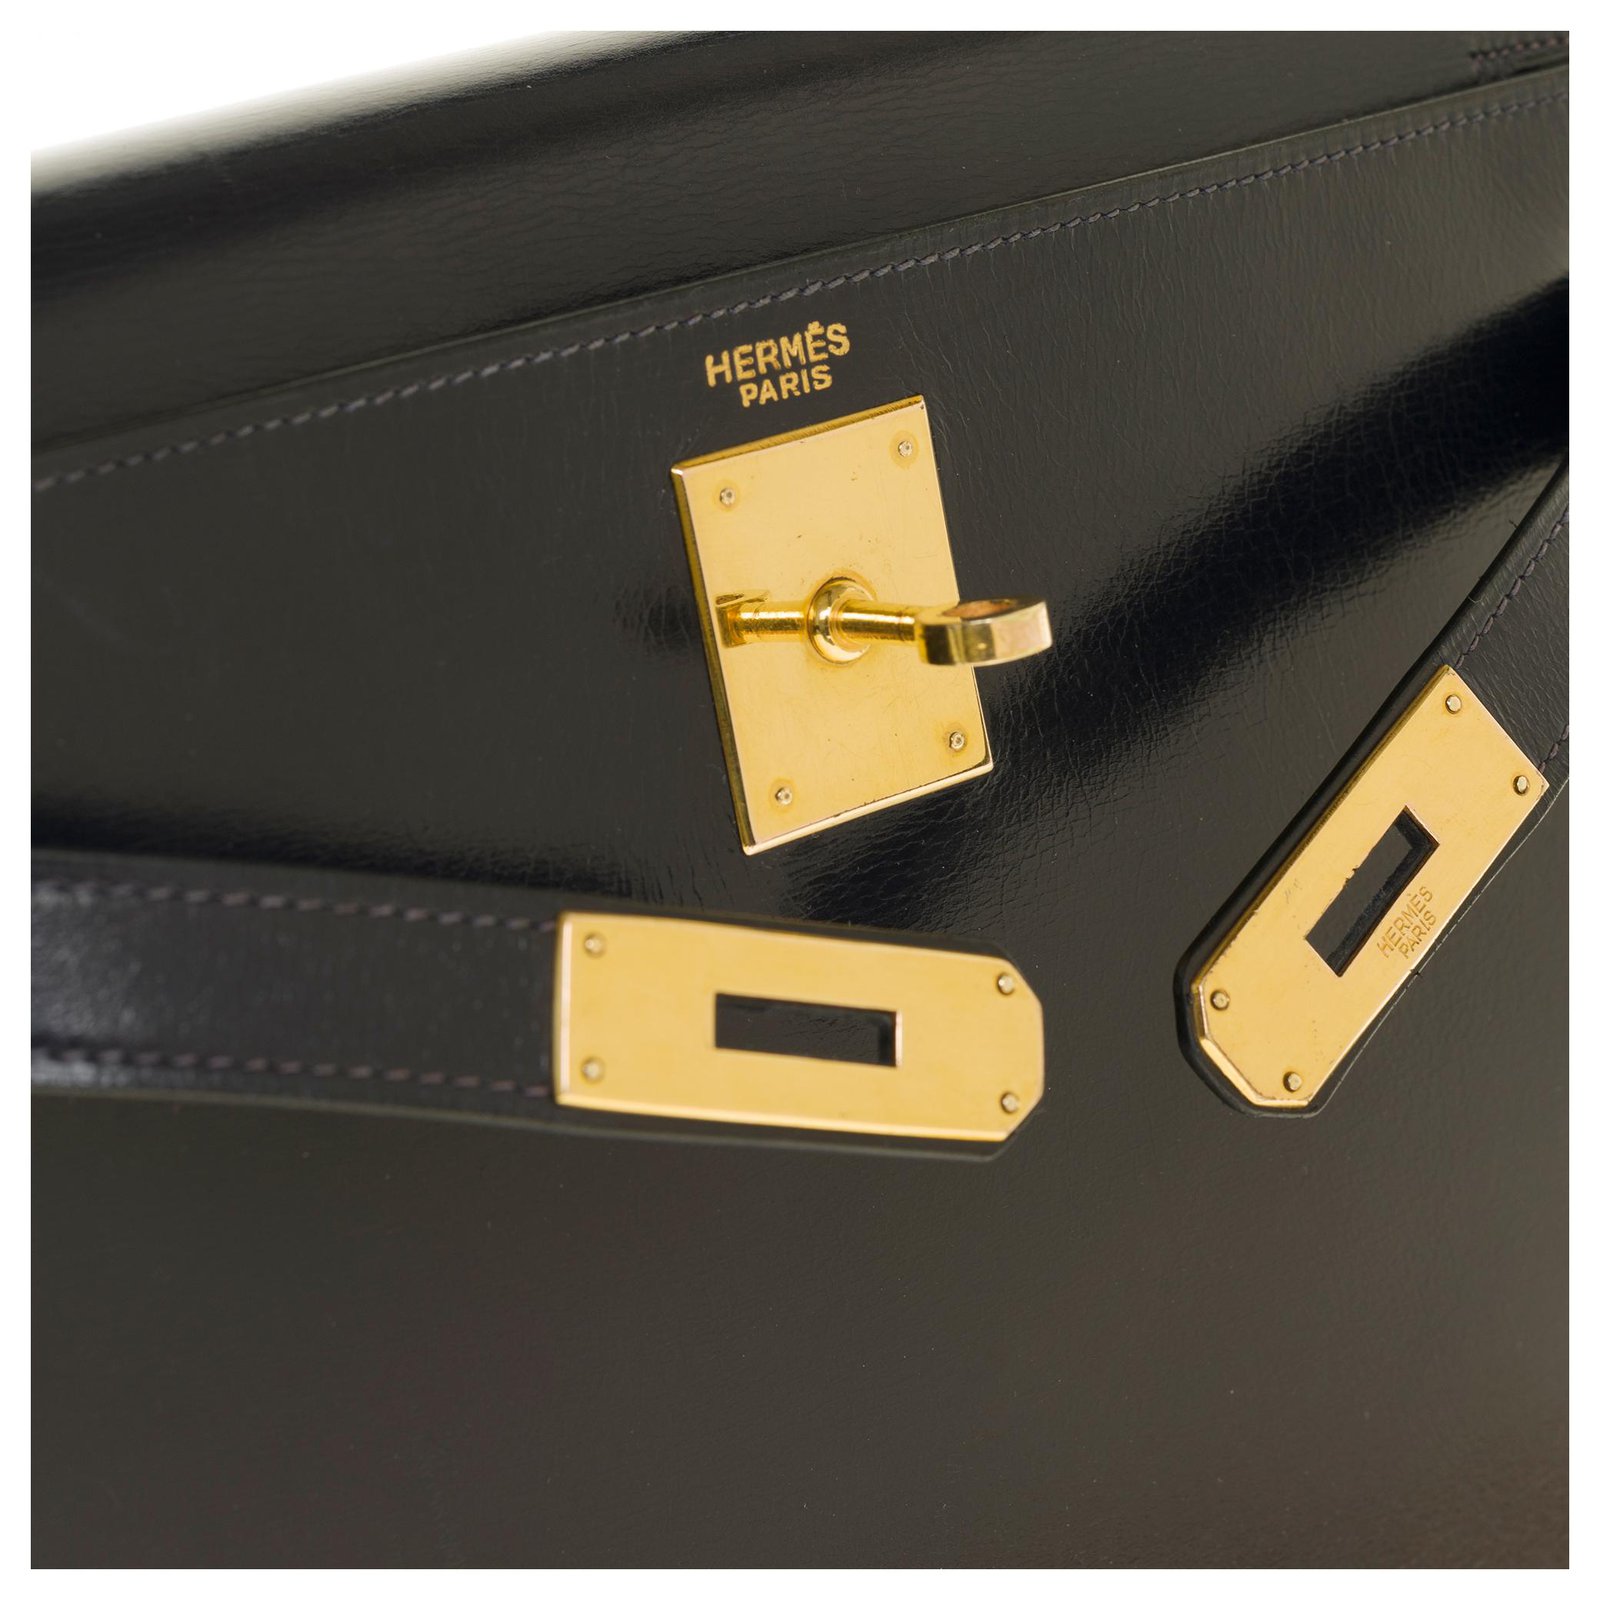 Splendid Hermès Kelly 30 saddle pad in navy box leather with shoulder ...